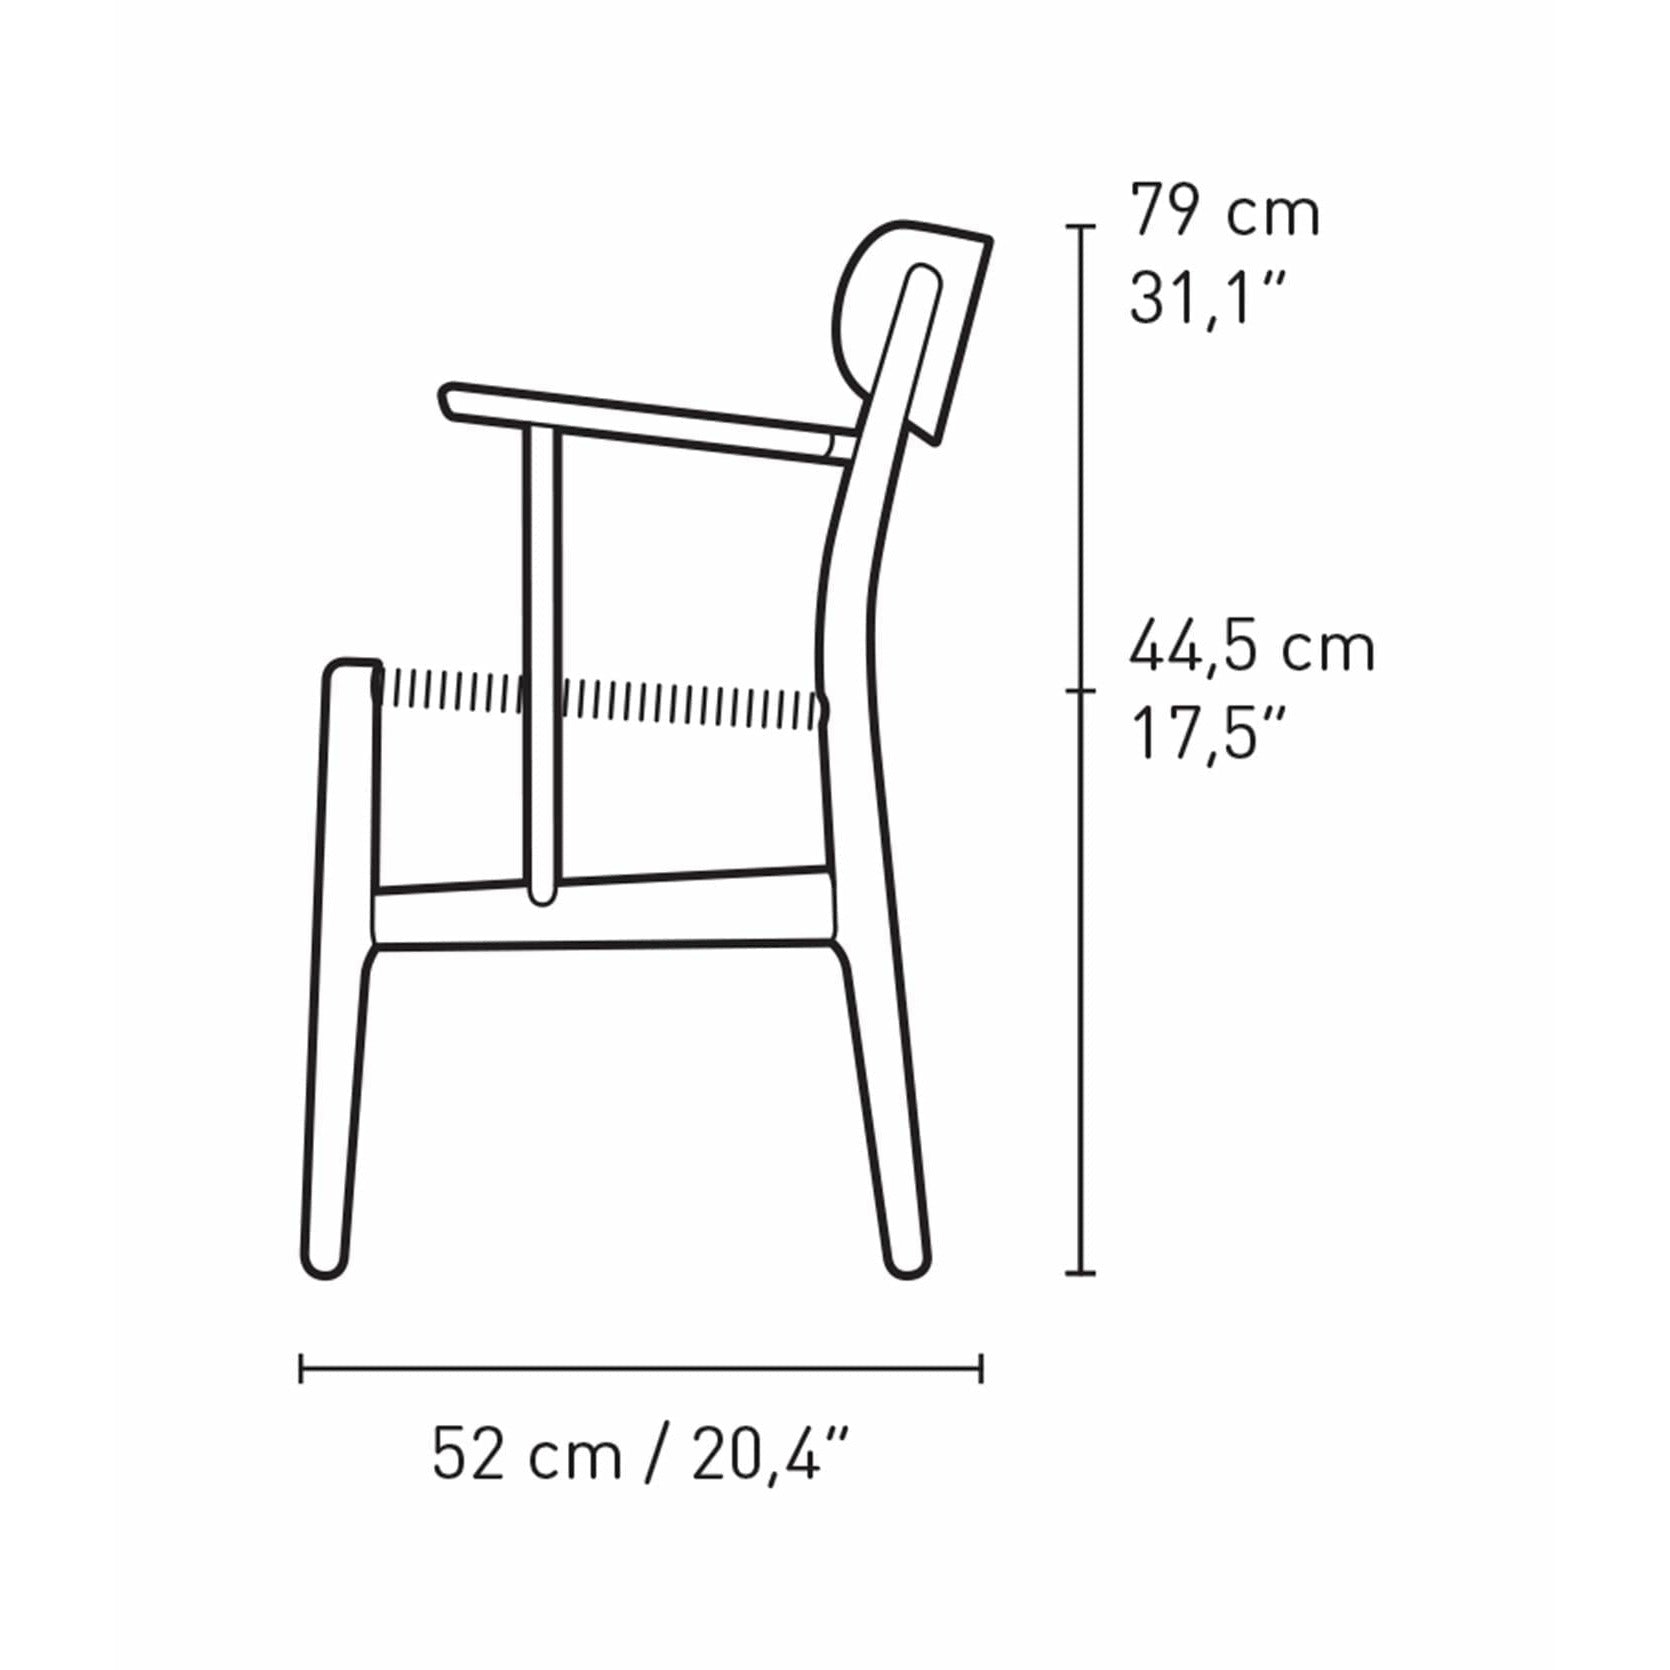 Carl Hansen CH26 stoel eiken rook gekleurde olie/arm en rug: eiken/dop: eiken, natuurlijk koord